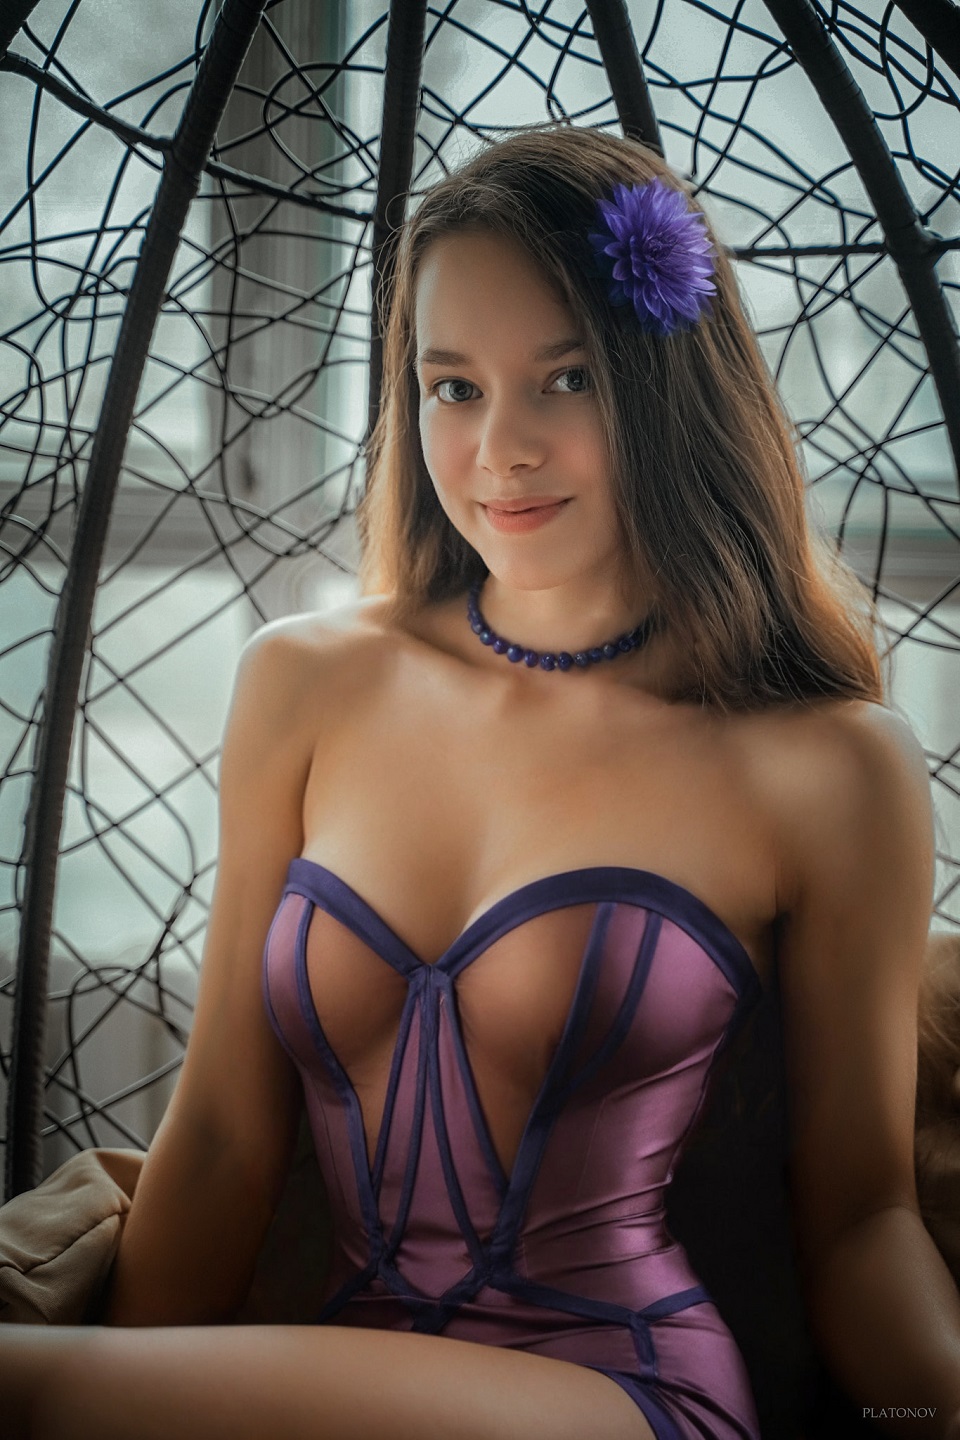 People 960x1440 Ivan Platonov women flower in hair purple clothing Flamy Nika smiling